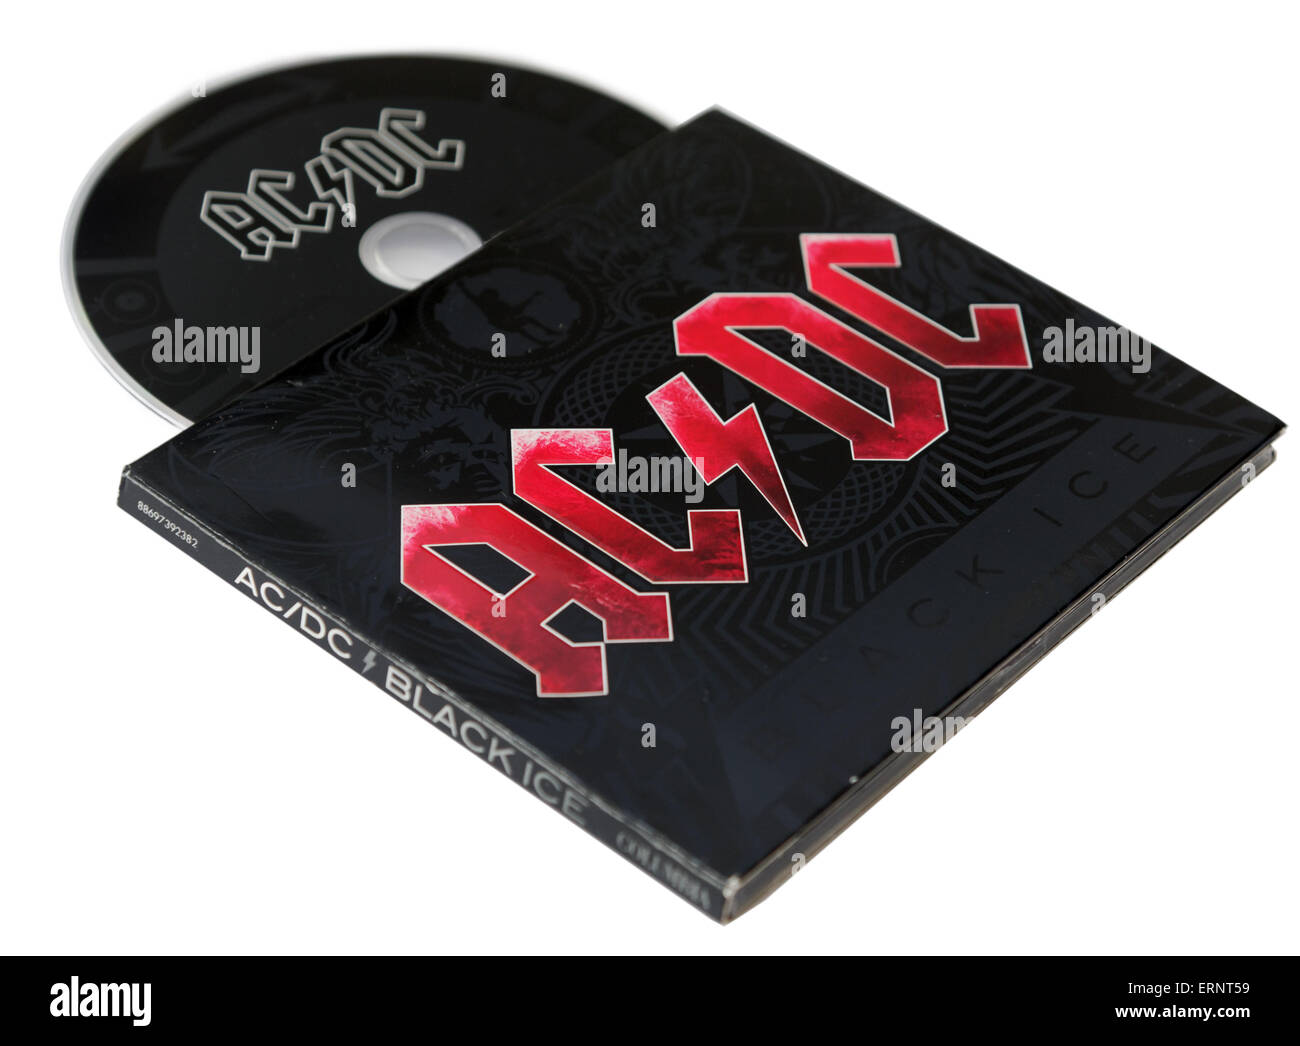 AC/DC Black Ice CD Stock Photo - Alamy